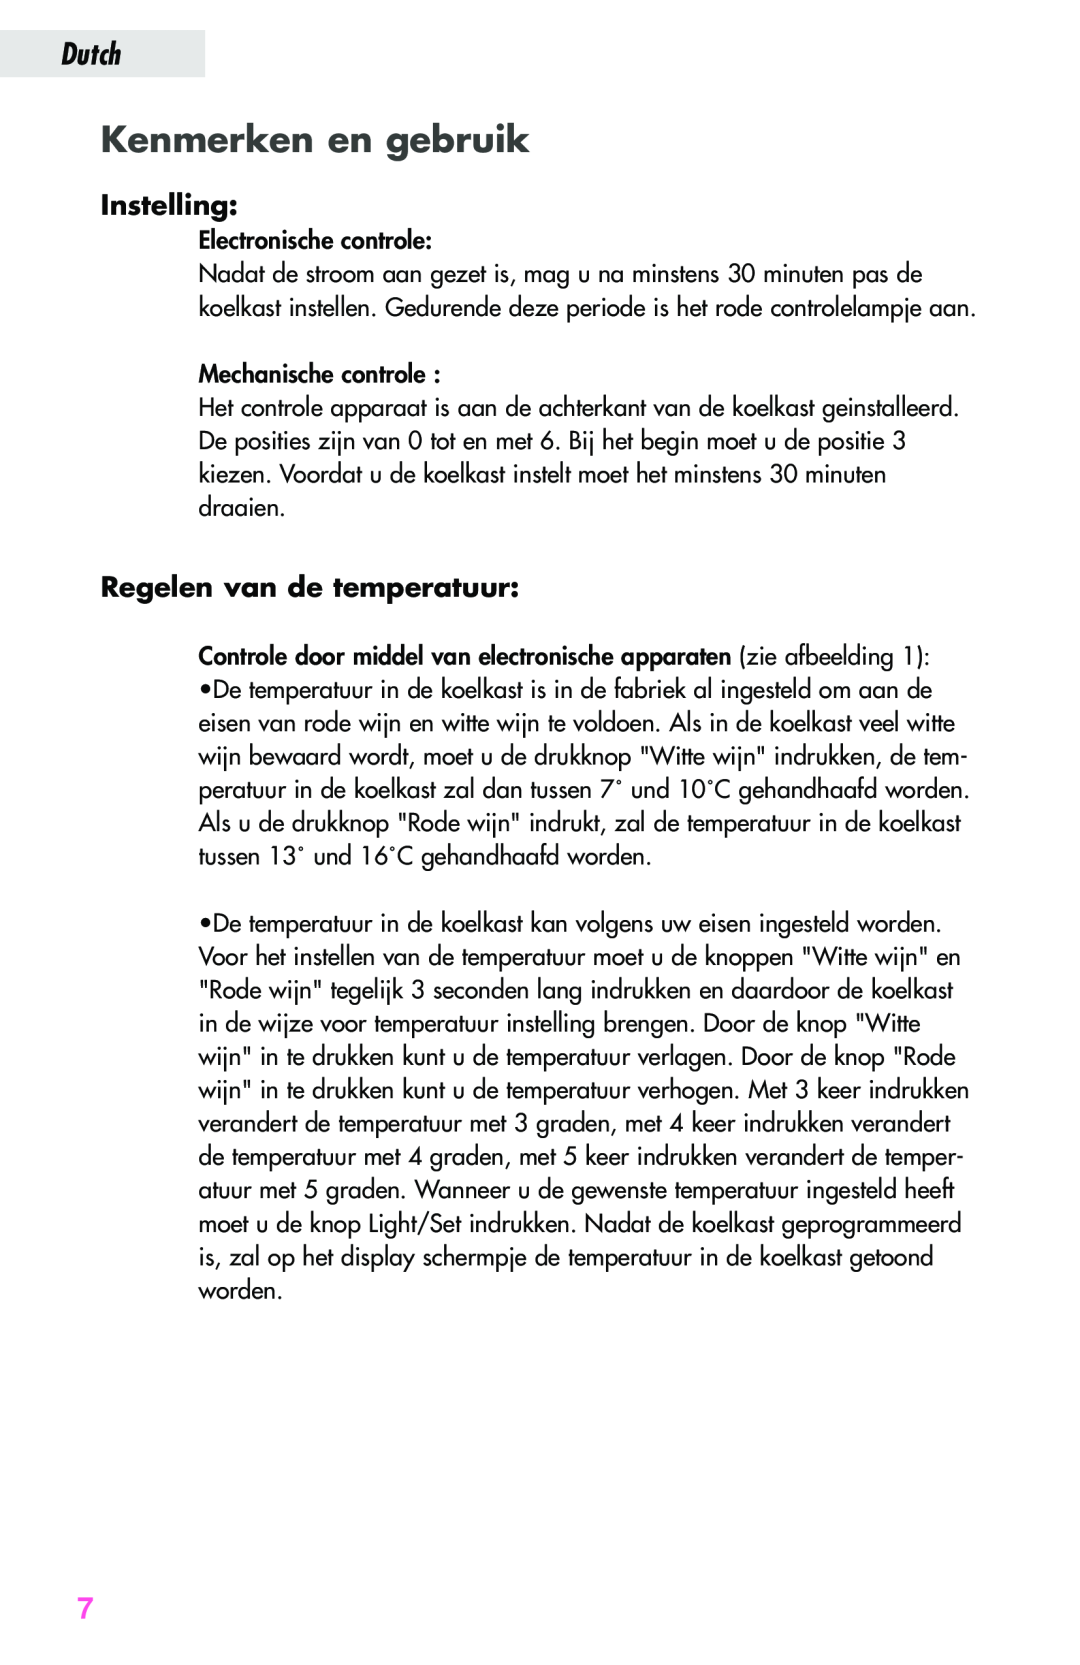 Haier JC-82GB manual Kenmerken en gebruik, Instelling, Regelen van de temperatuur, Dutch 